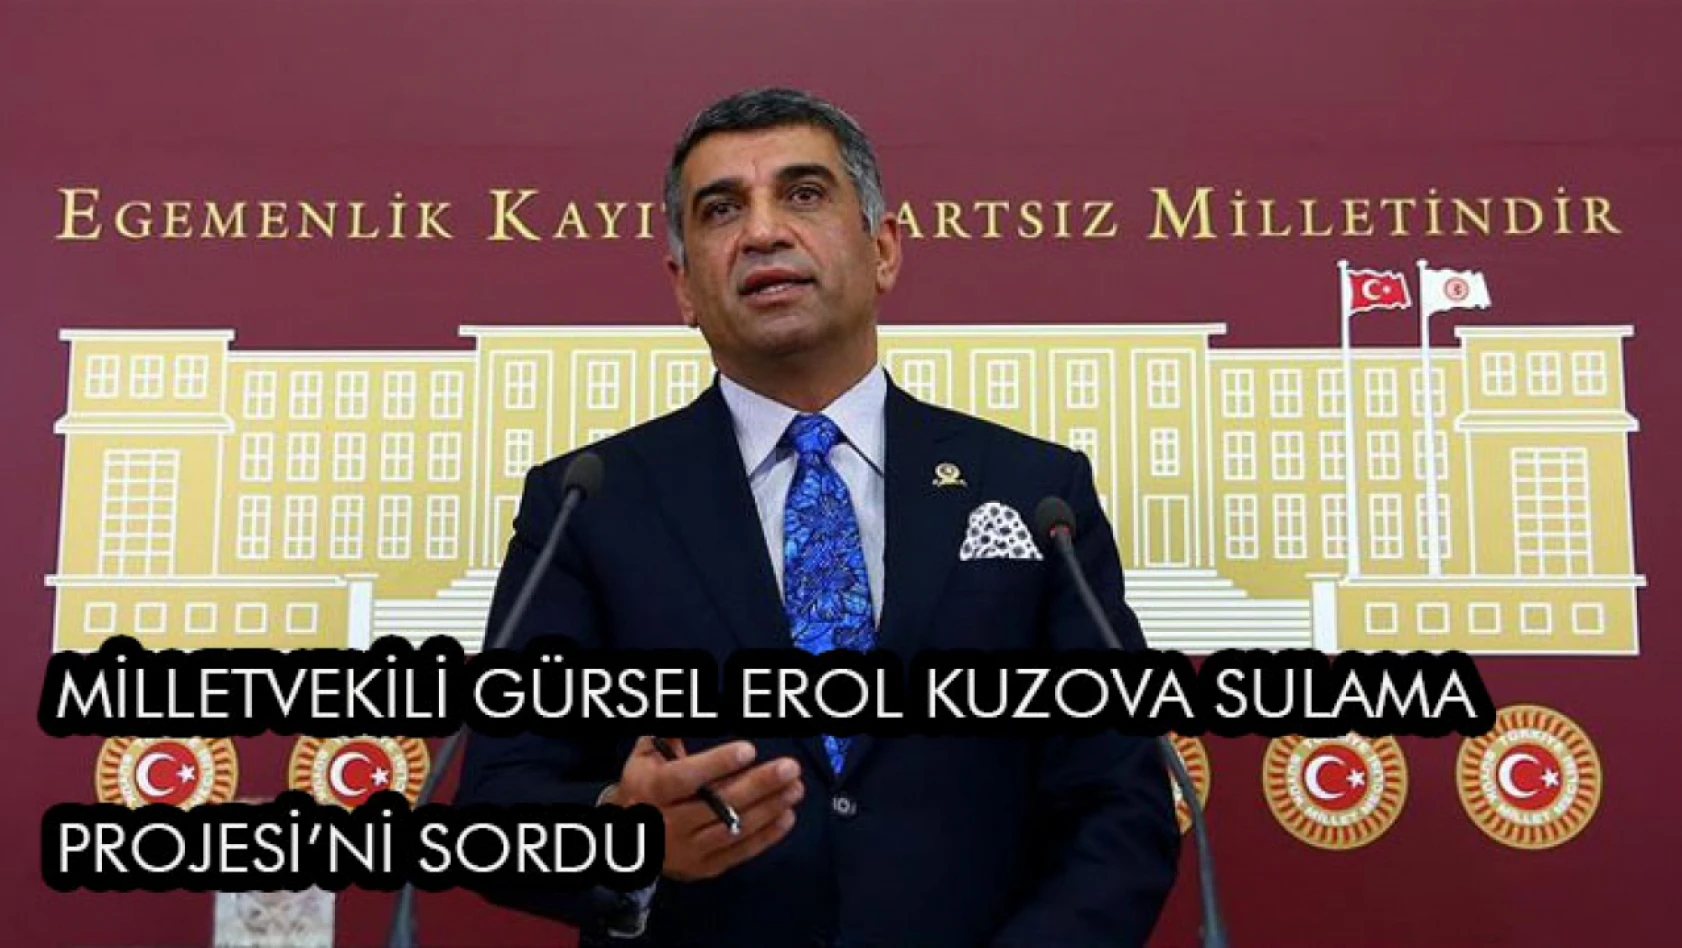 Milletvekili Gürsel Erol Kuzova Sulama Projesi'ni Sordu